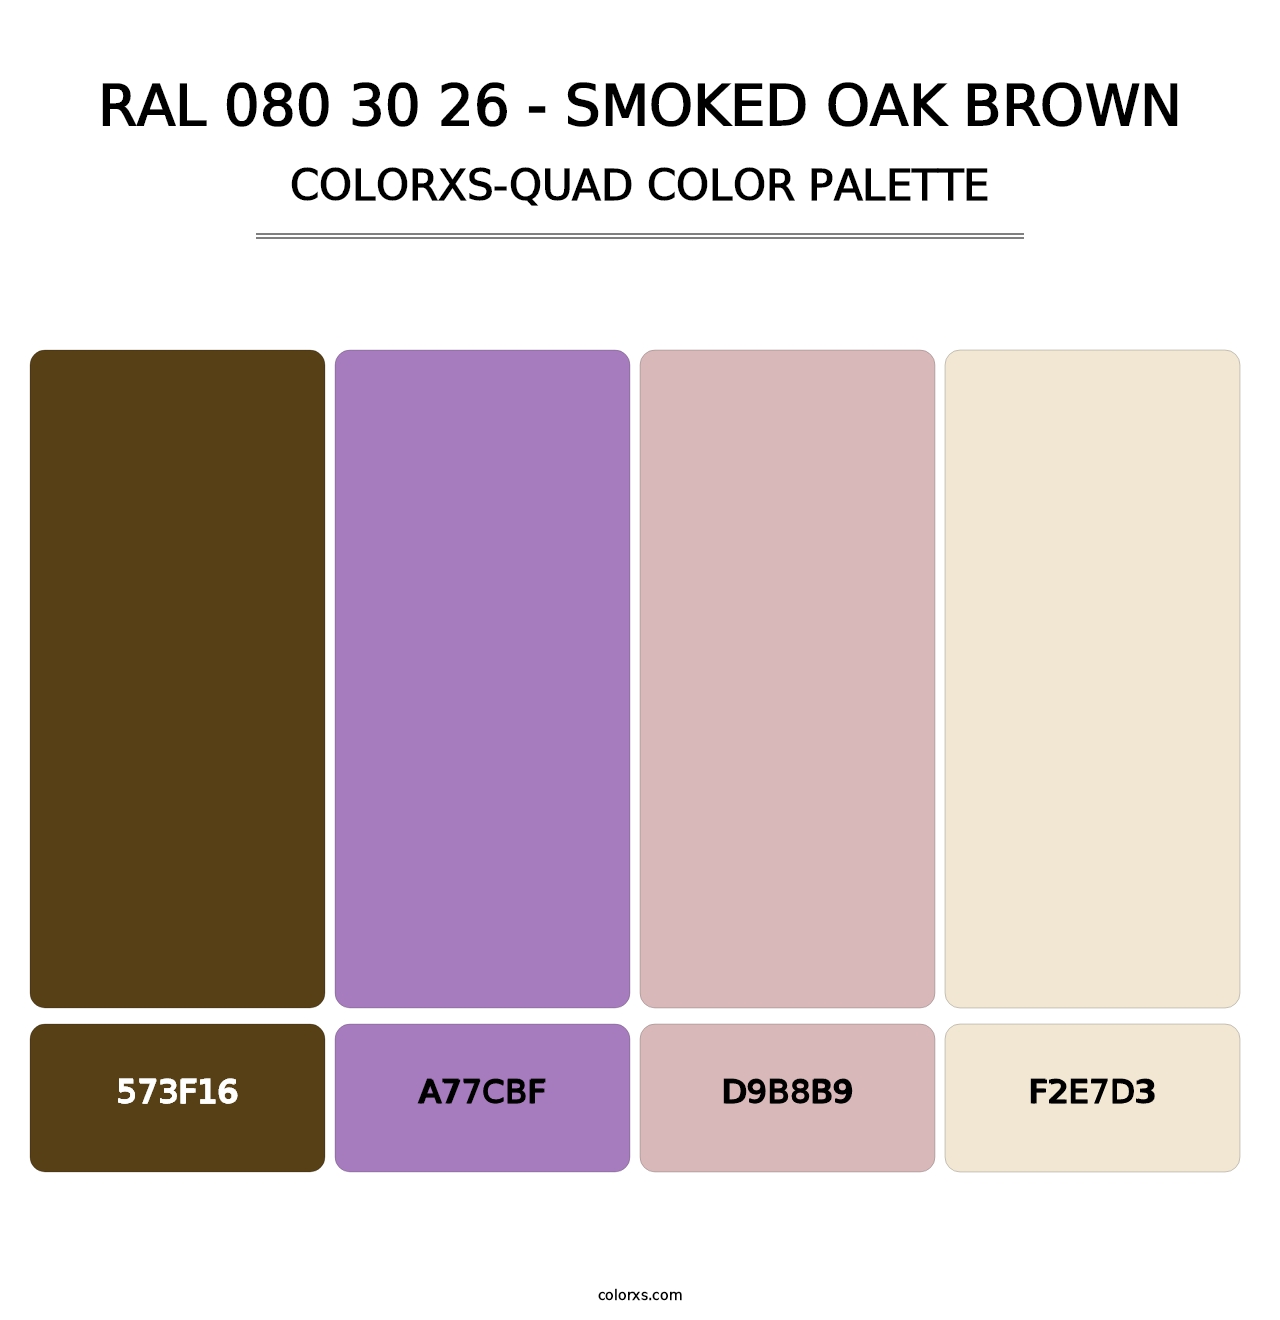 RAL 080 30 26 - Smoked Oak Brown - Colorxs Quad Palette